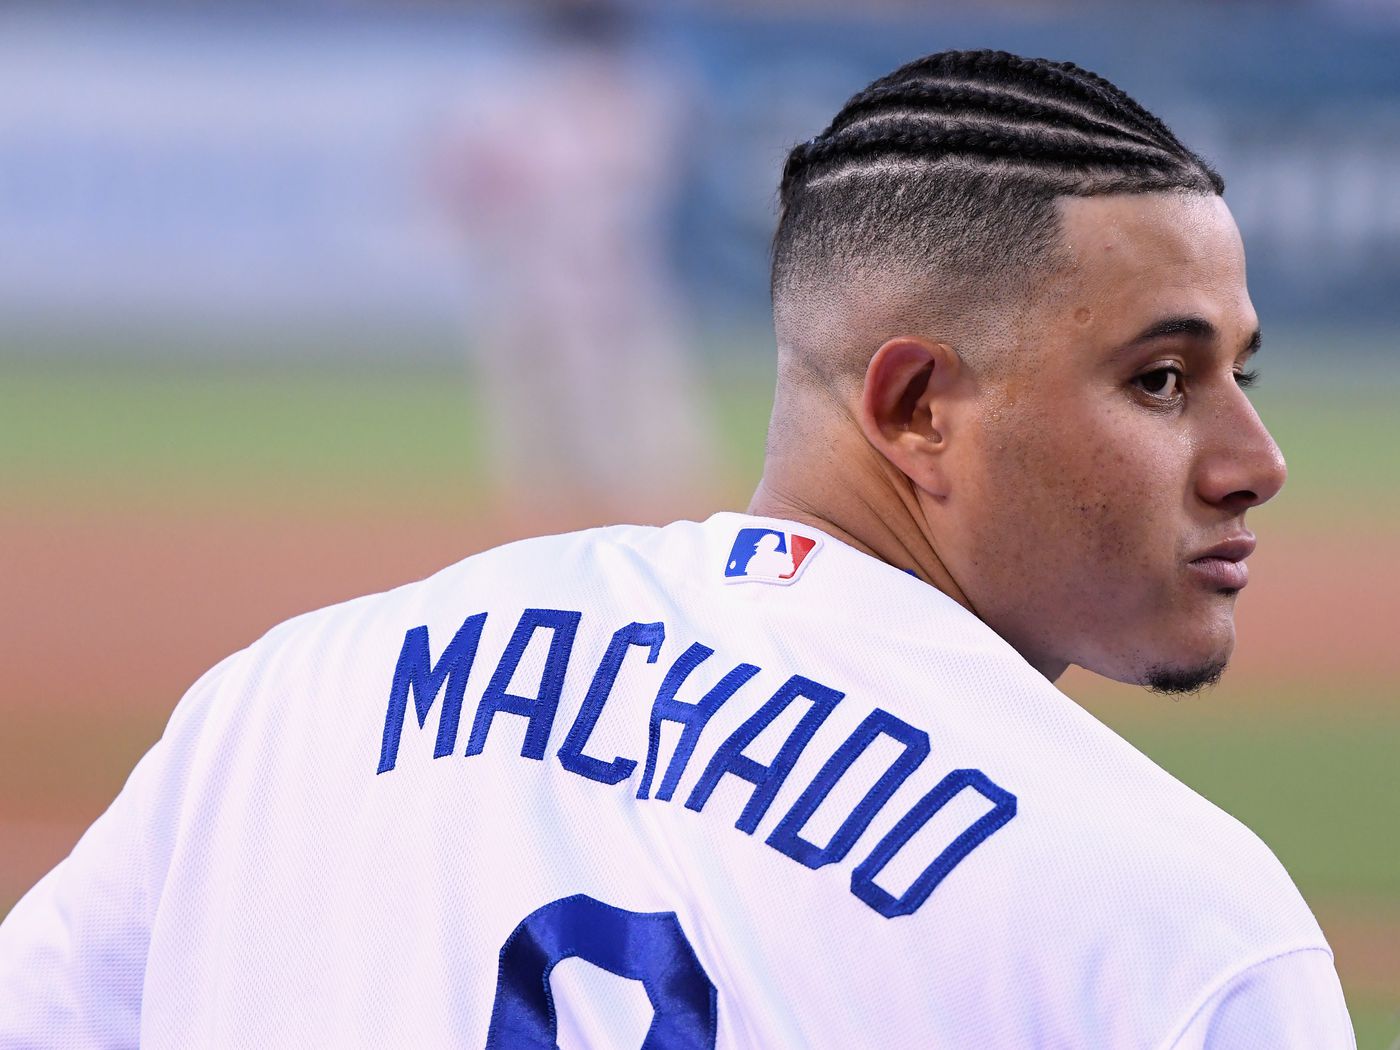 mohawk baseball player haircut